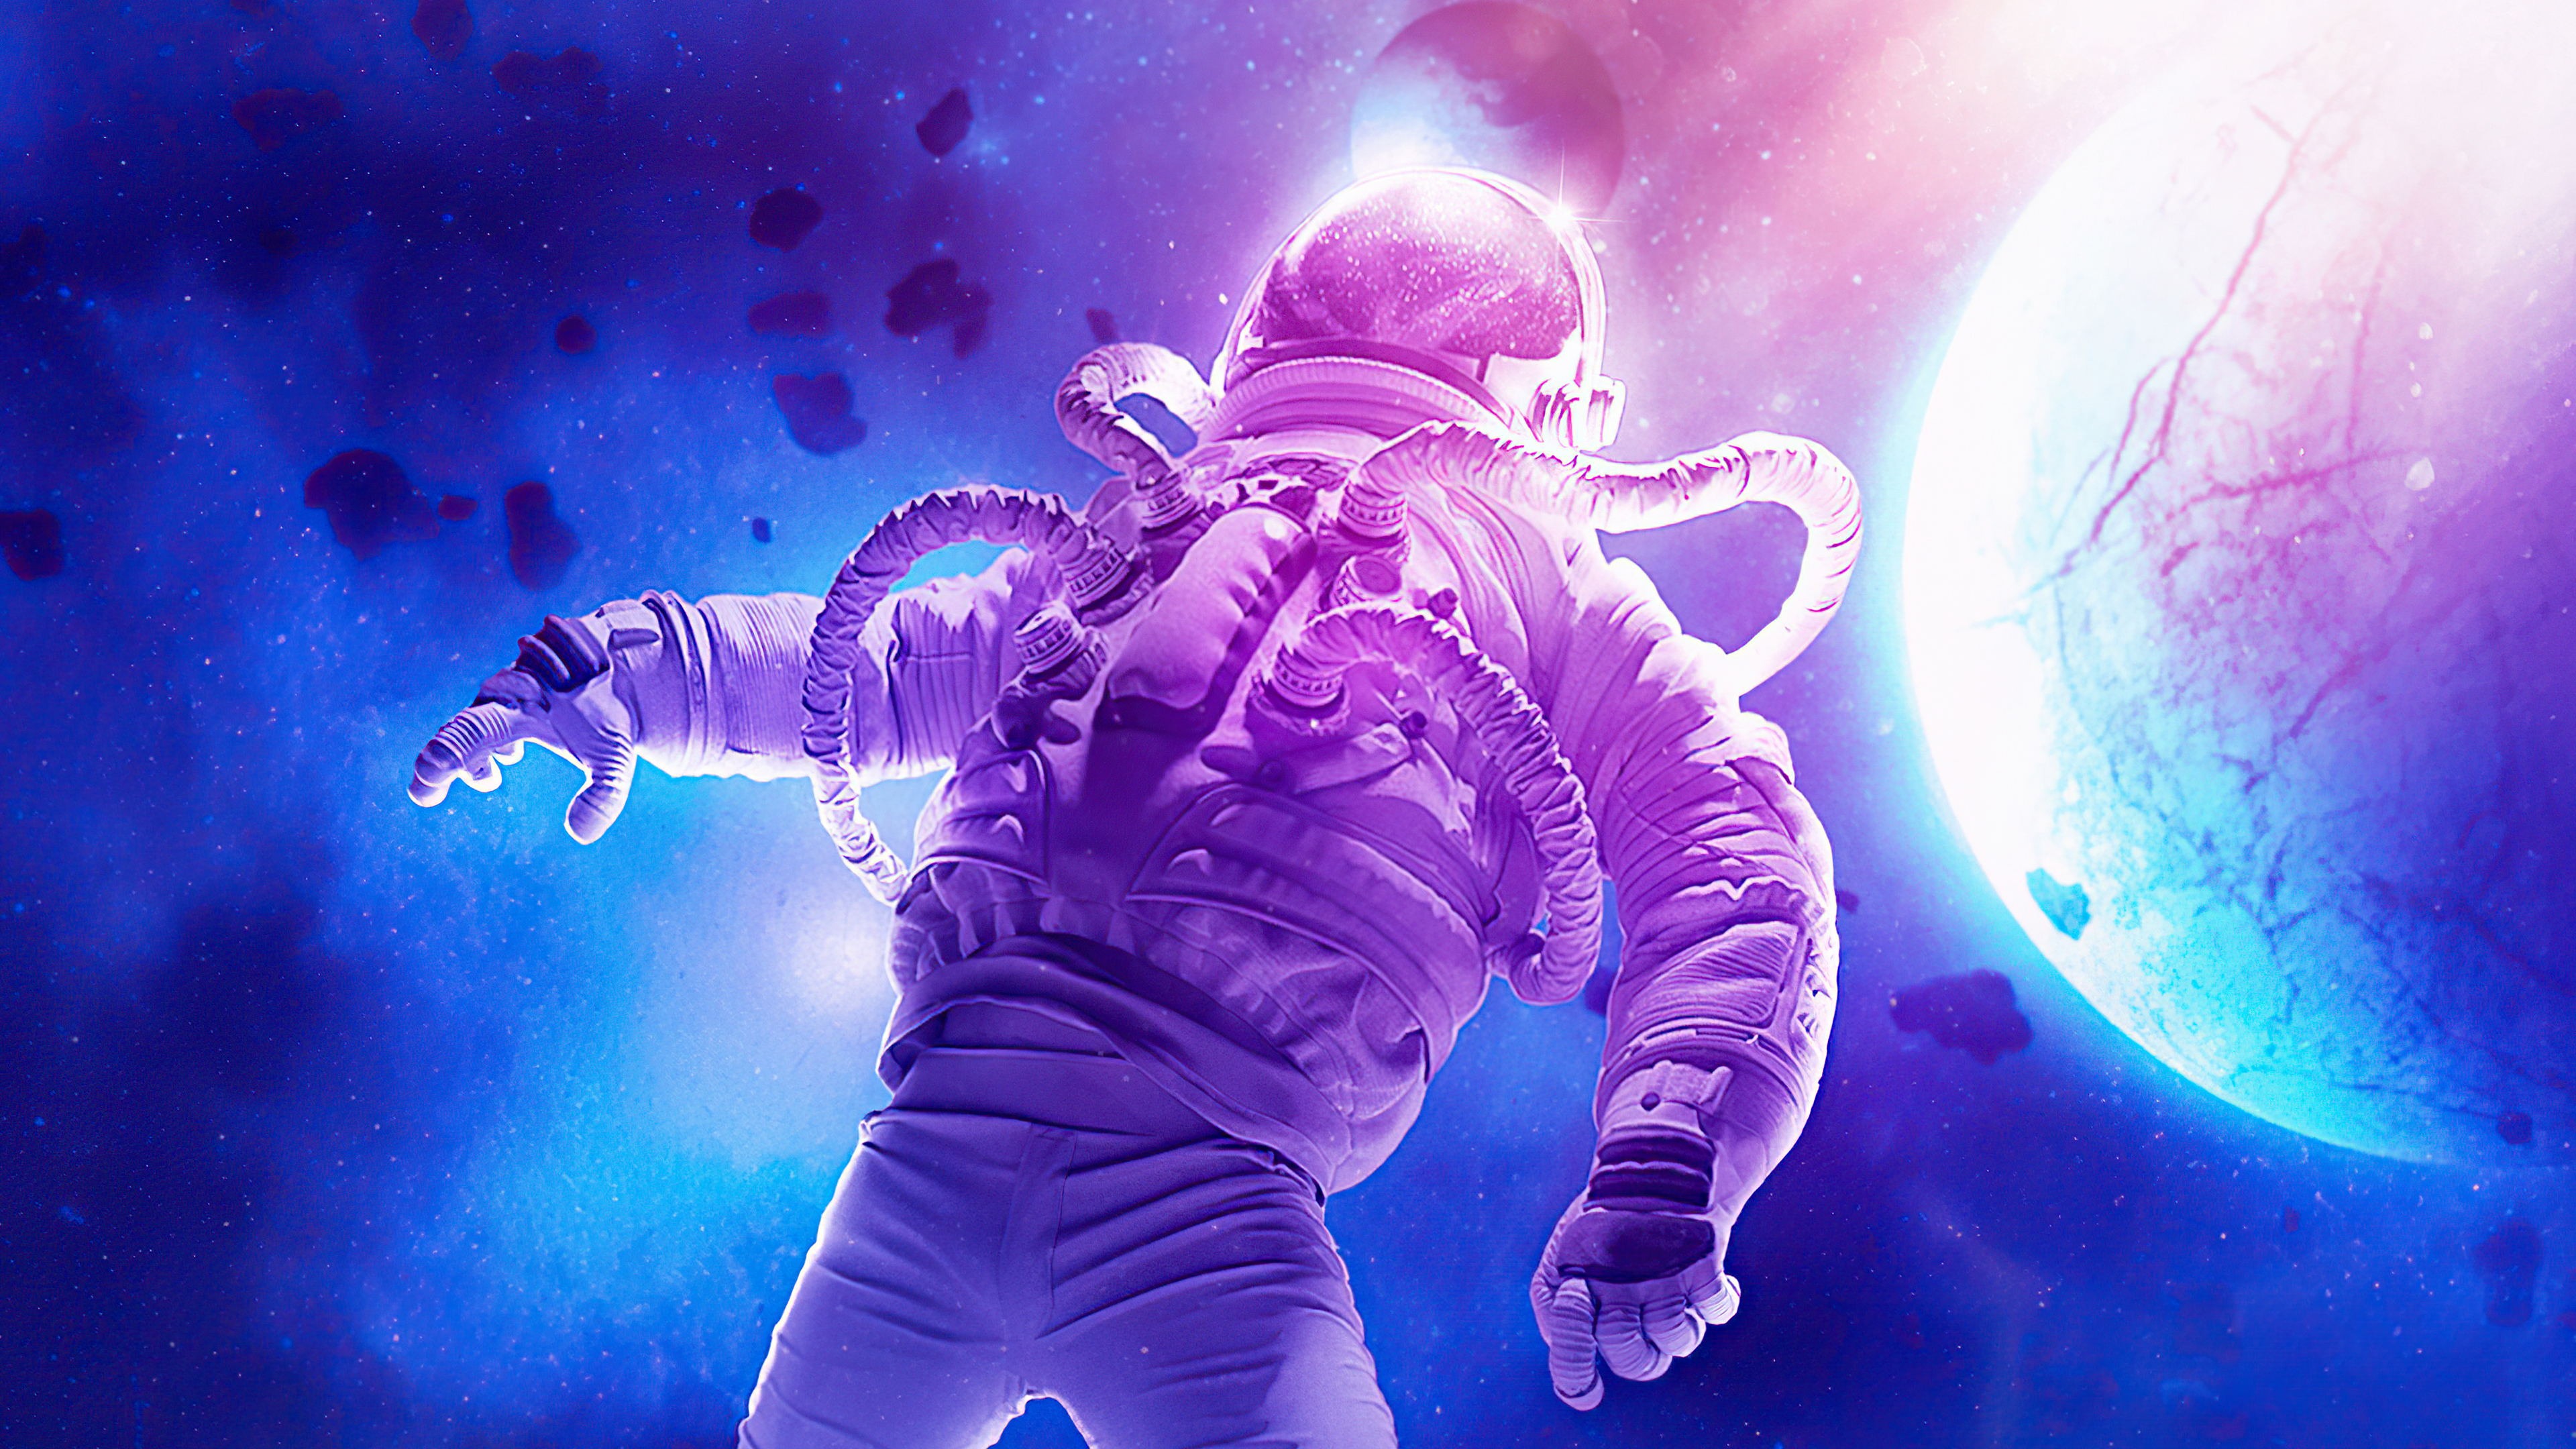 Sci Fi Astronaut 4k Ultra HD Wallpaper by Universegfx